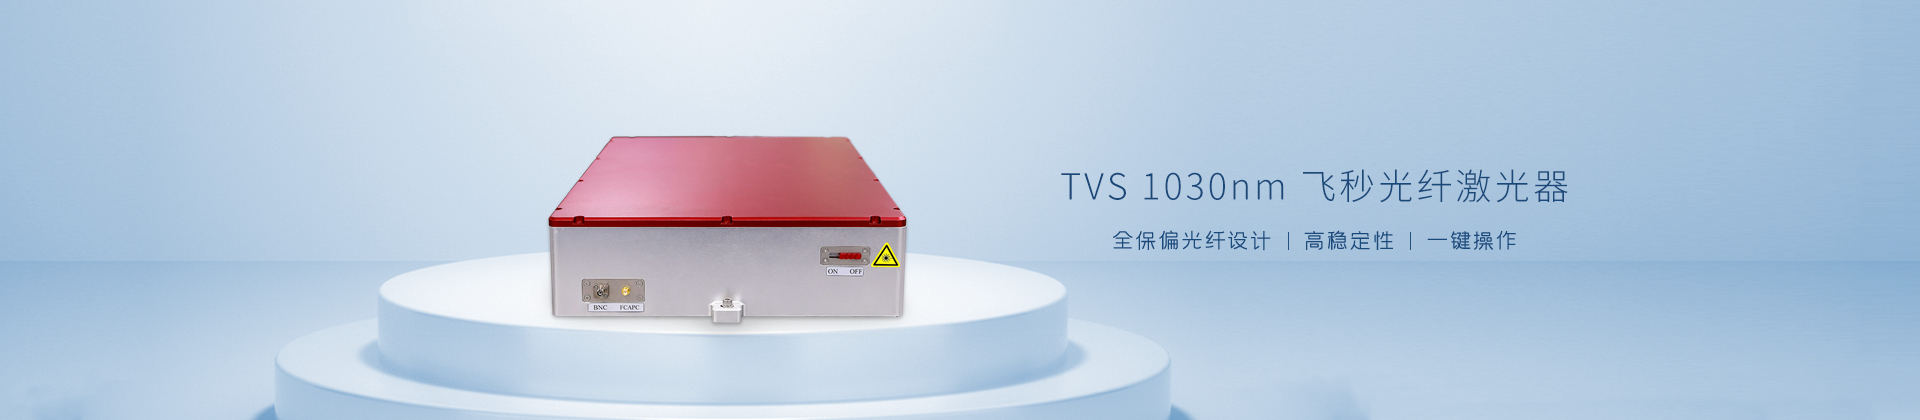 TVS 1030nm飞秒光纤激光器